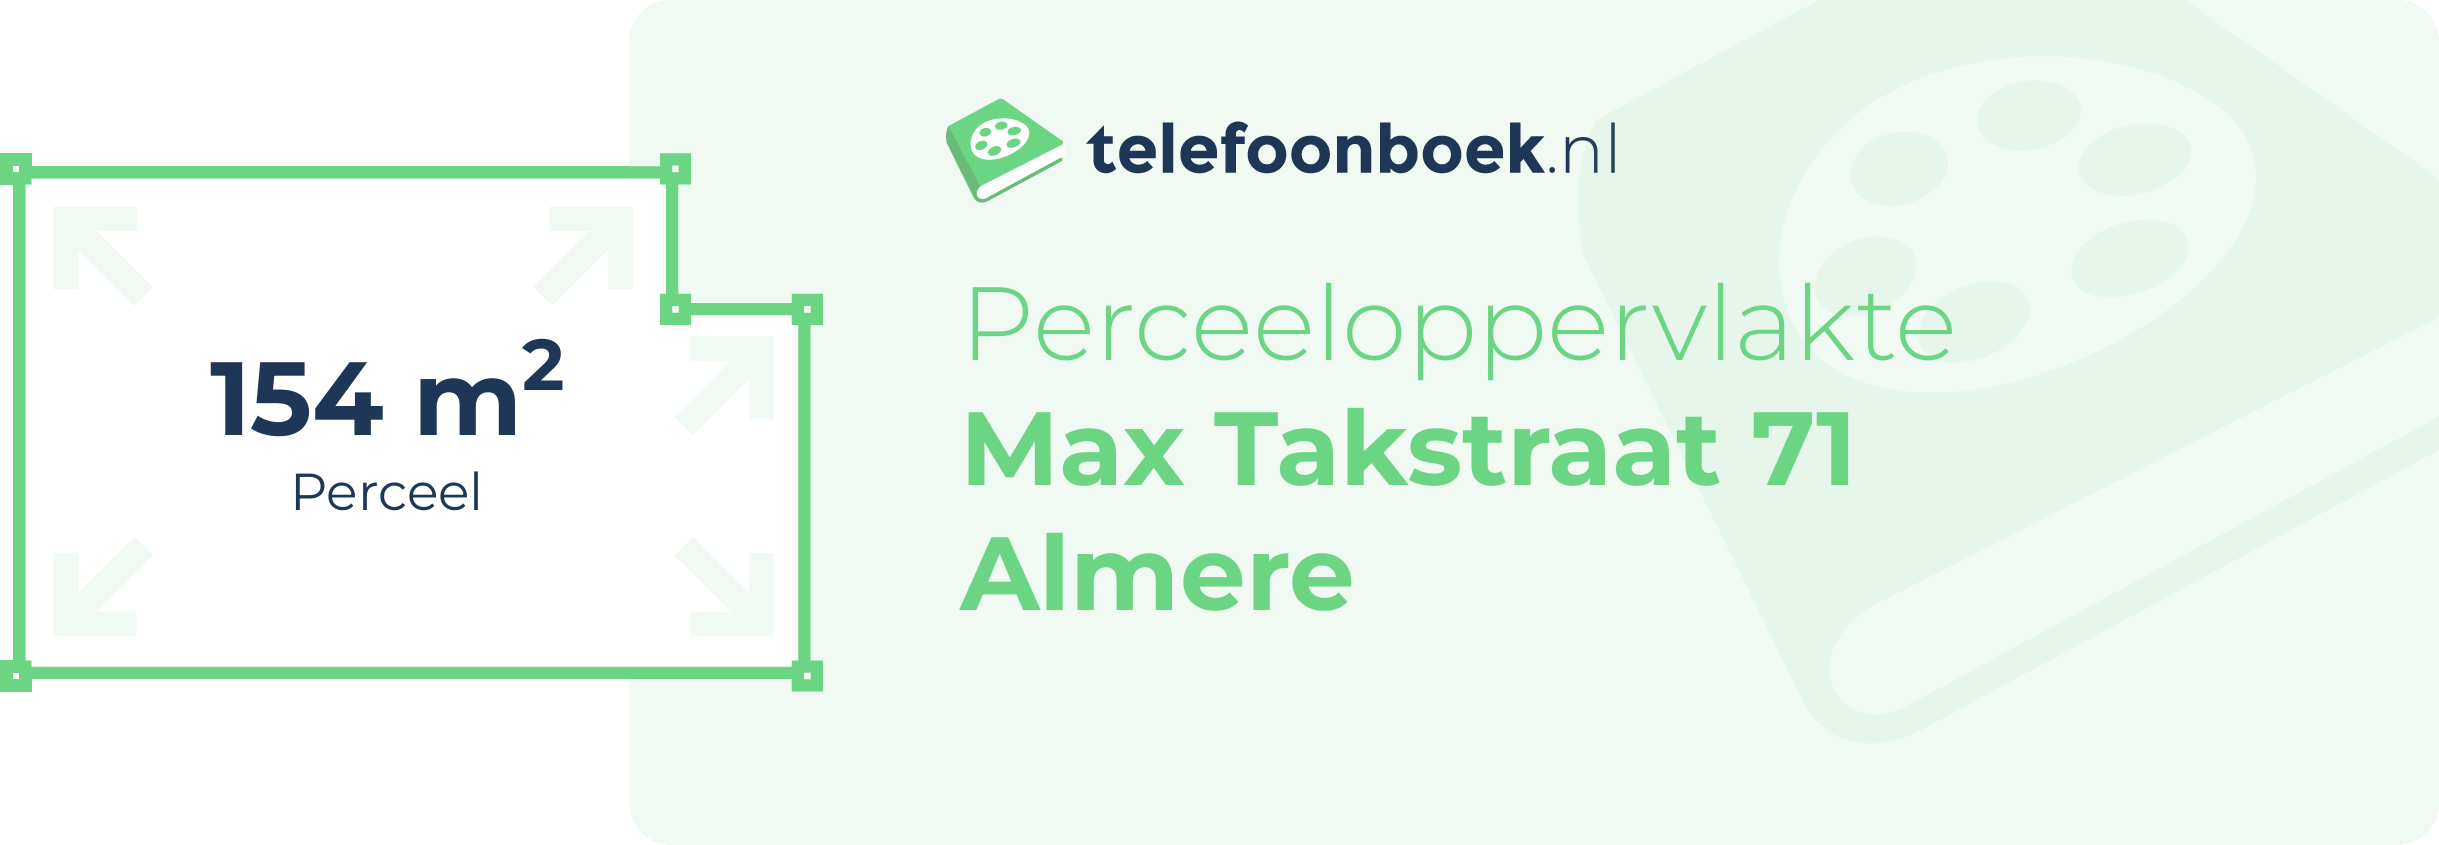 Perceeloppervlakte Max Takstraat 71 Almere